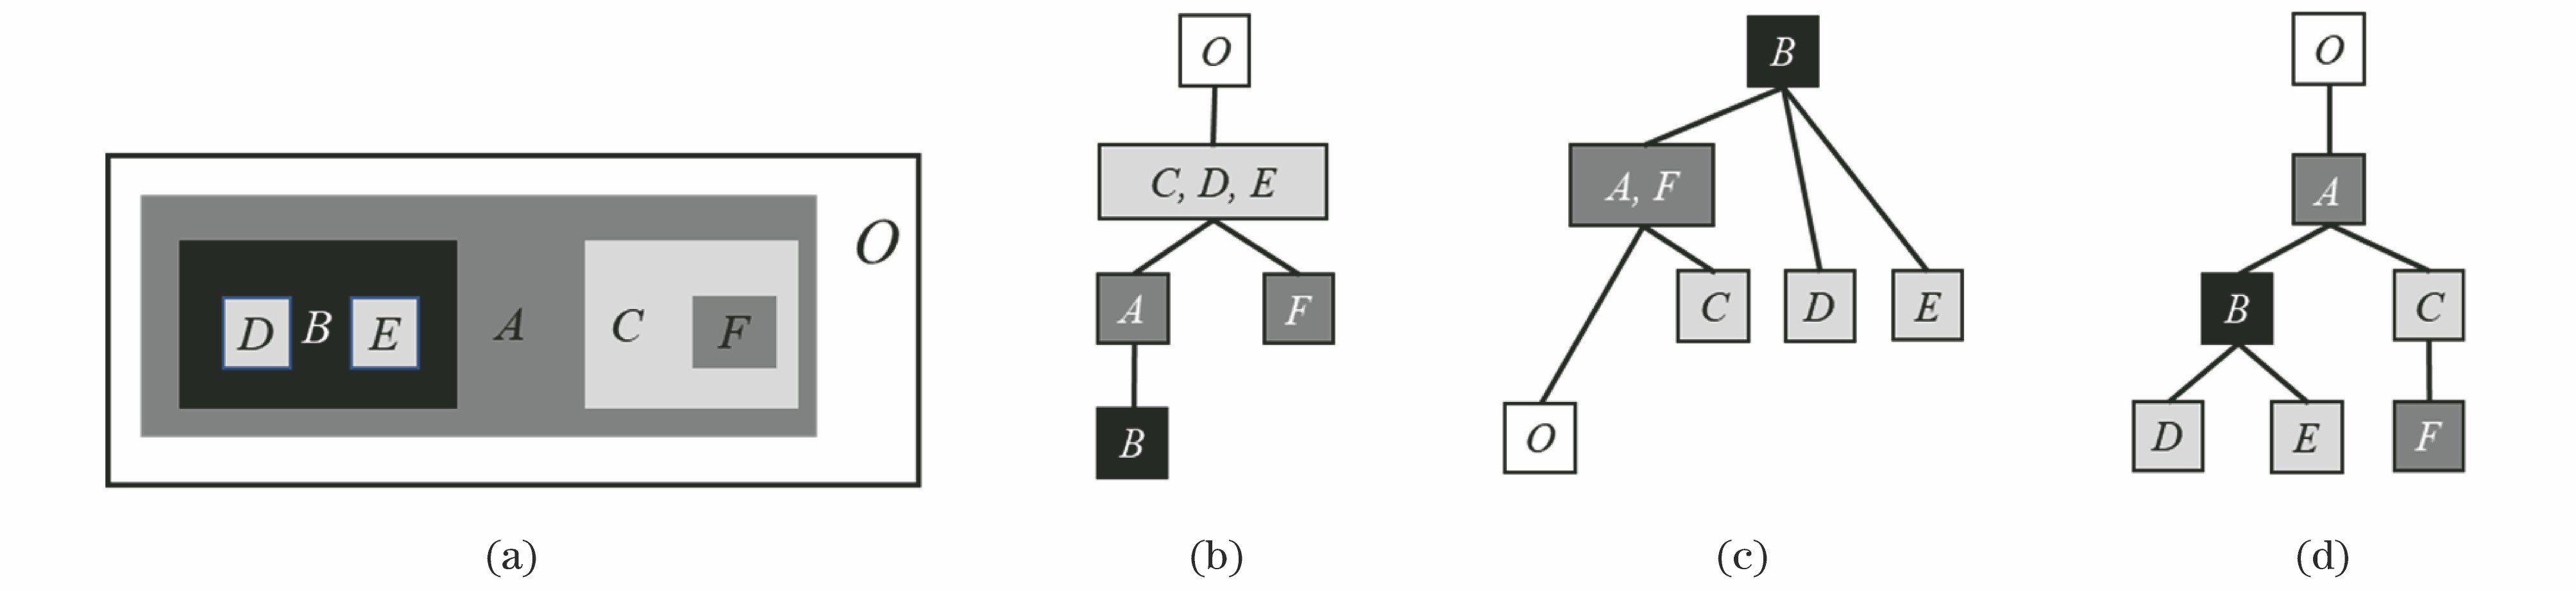 Tree structure of image. (a) Original image; (b) min-tree; (c) max-tree; (d) tree of shape